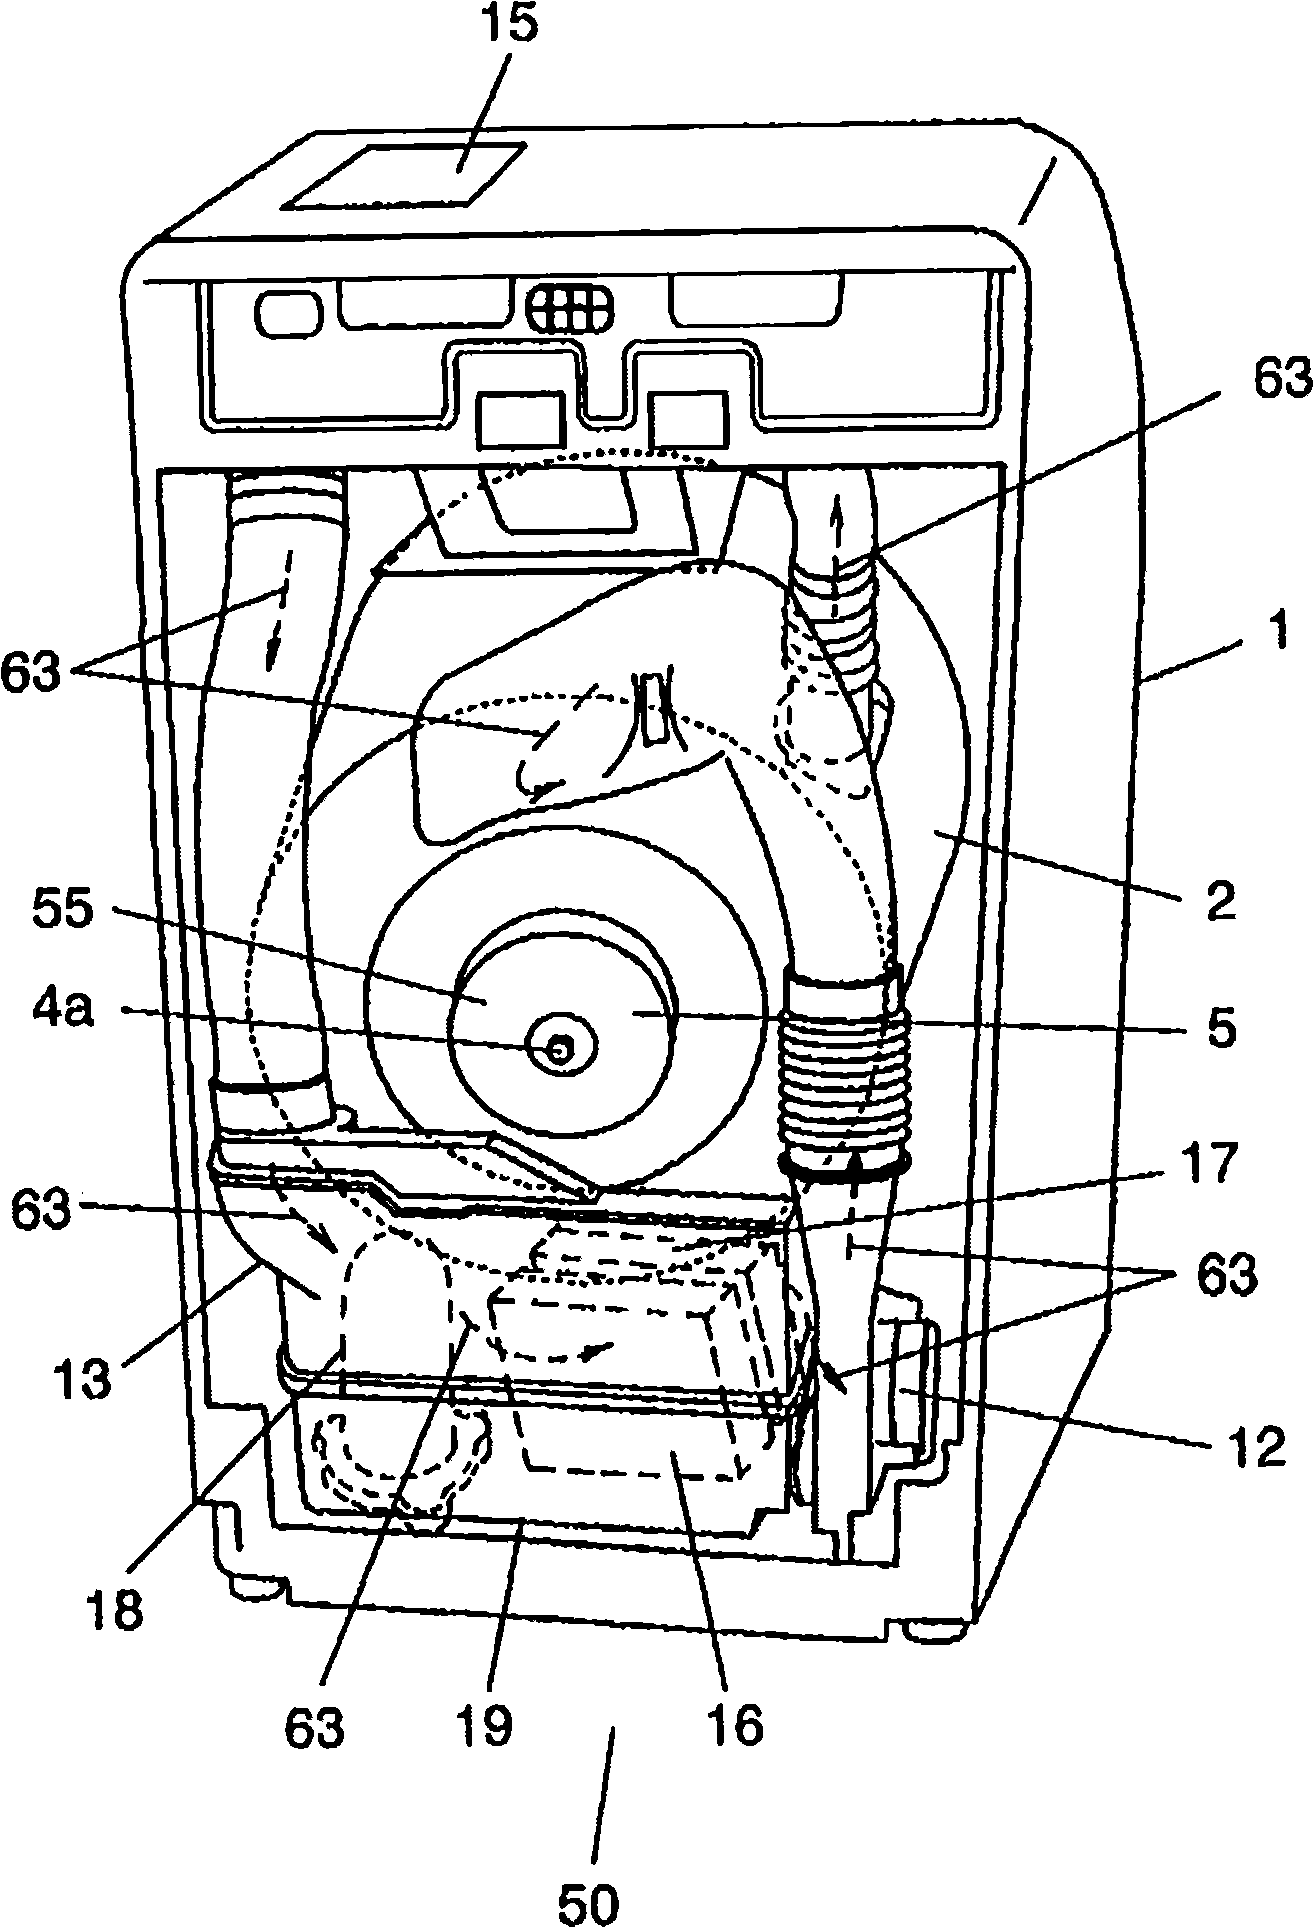 Motor unit, method of assembling motor unit, washing machine, and method of assembling washing machine